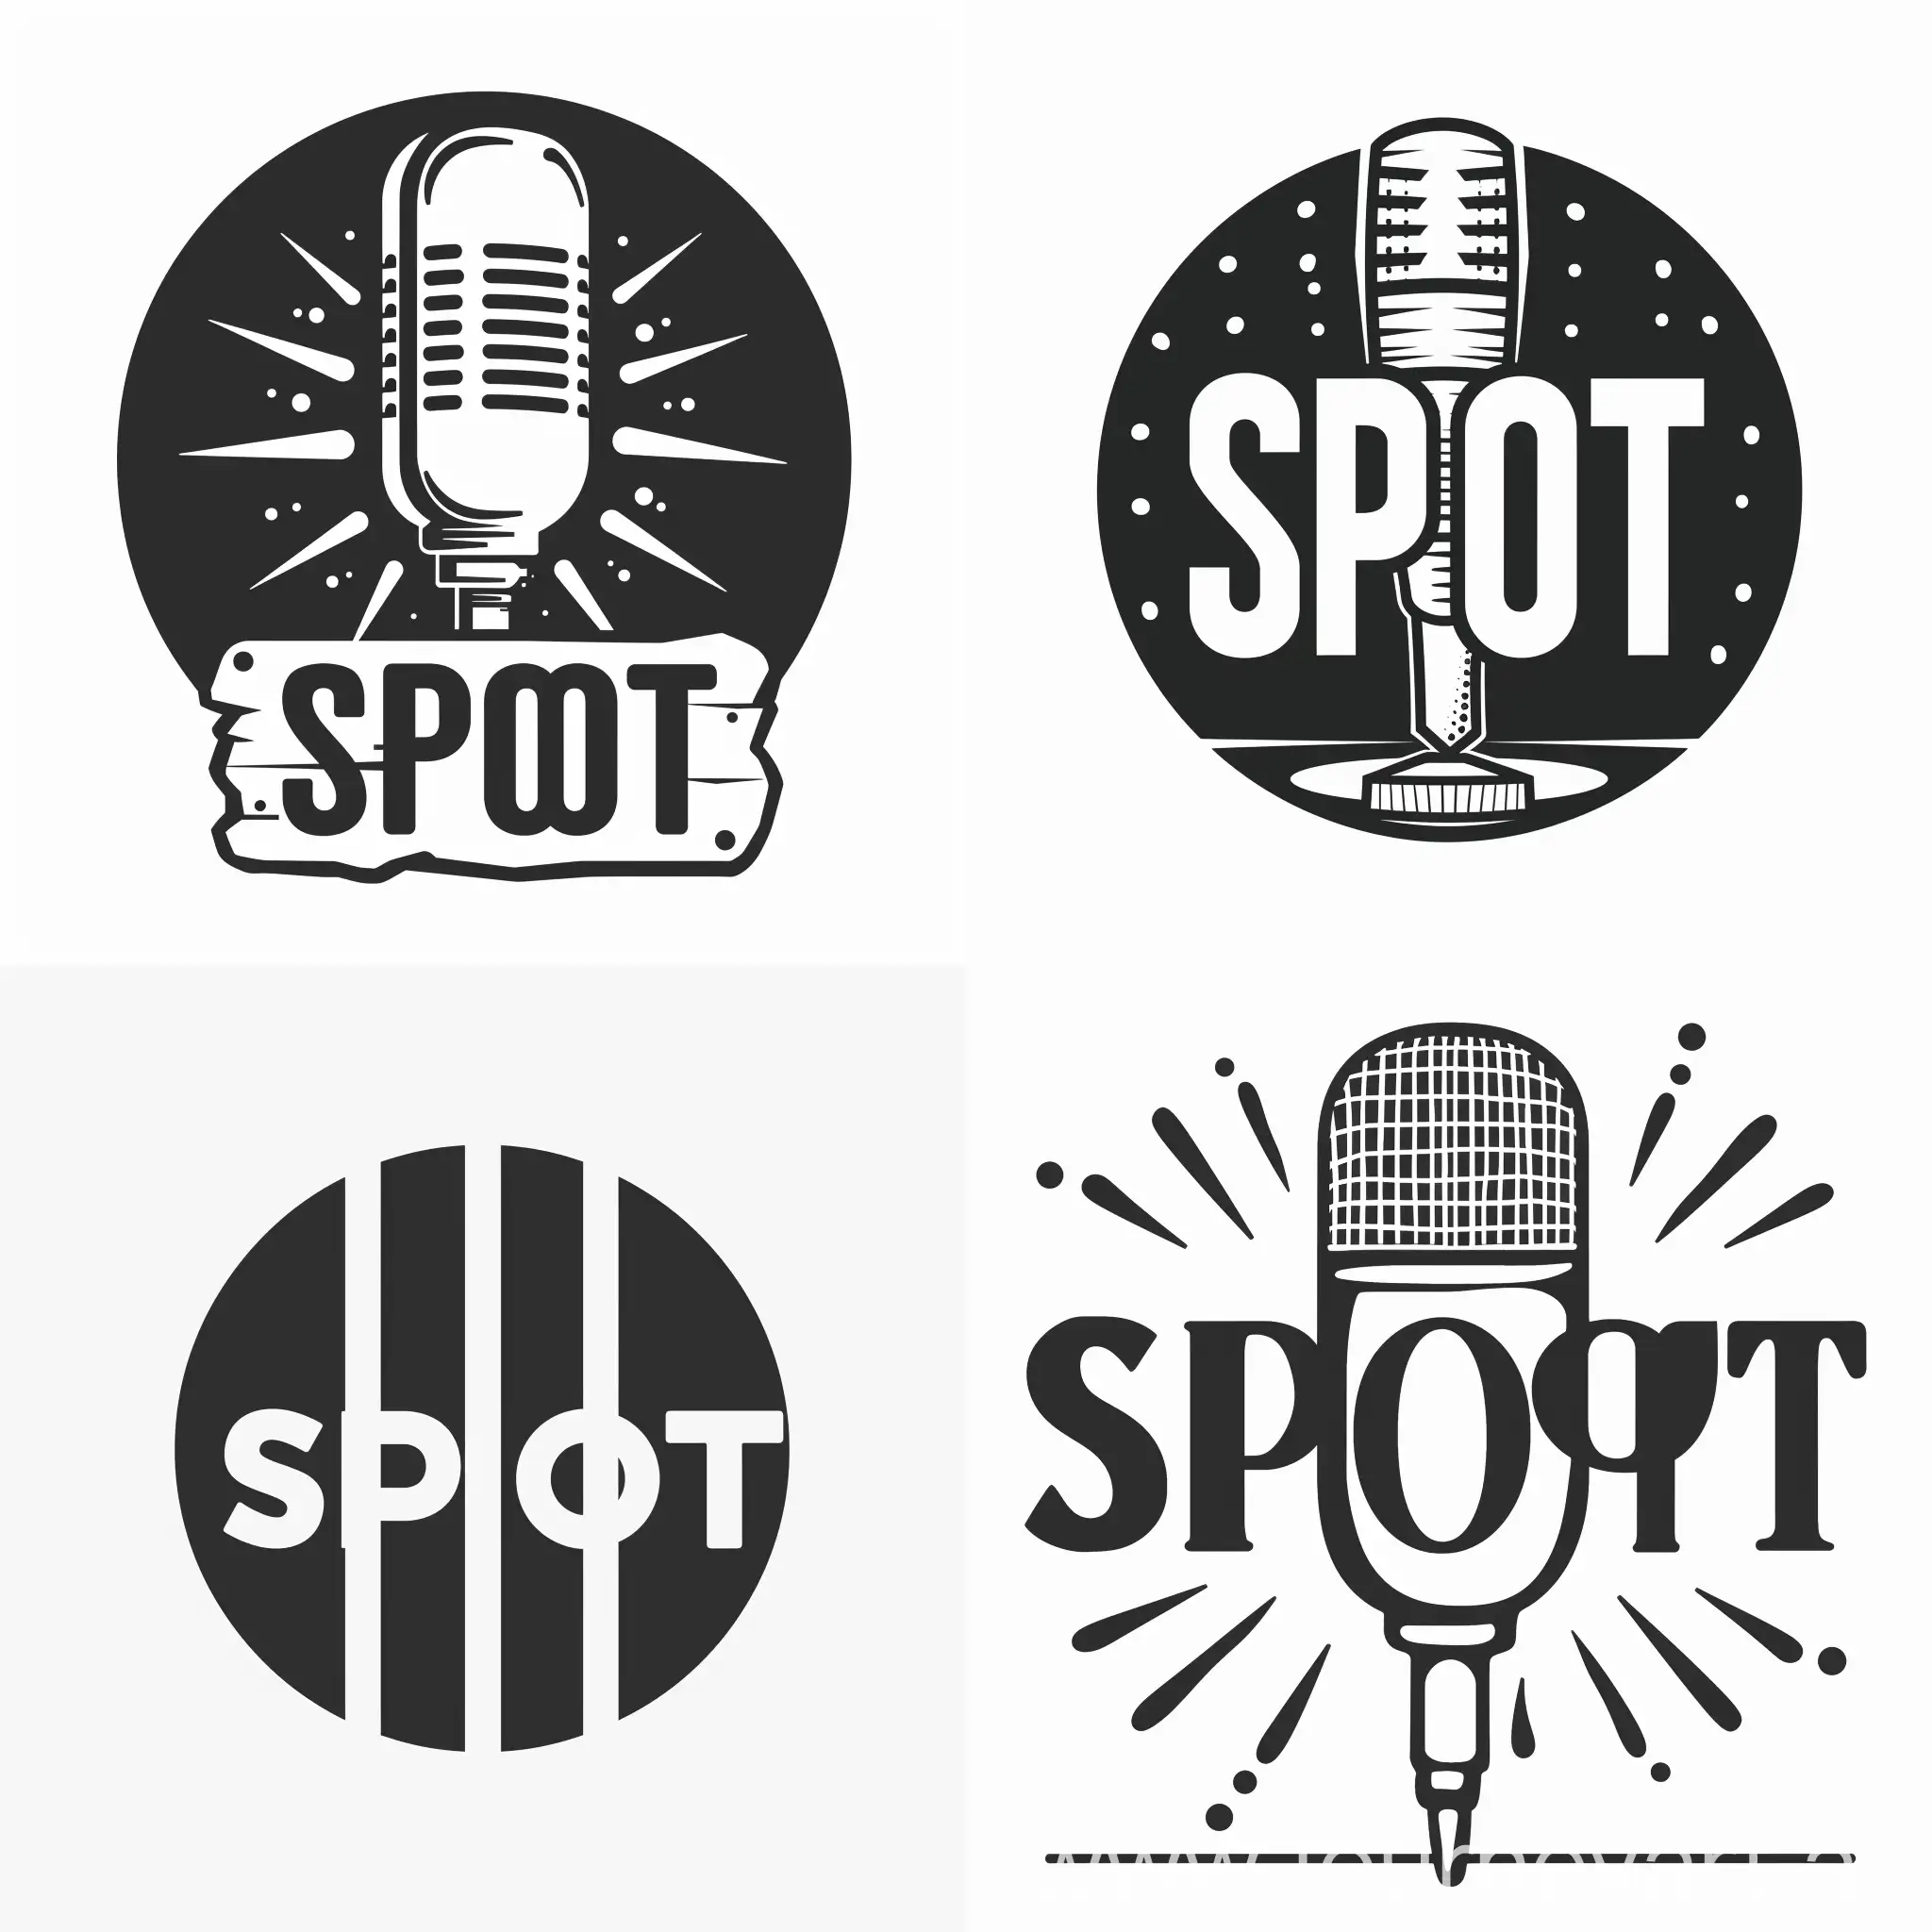 Podcast studio logo, black and white color, minimalism style, studio name "SPOT"